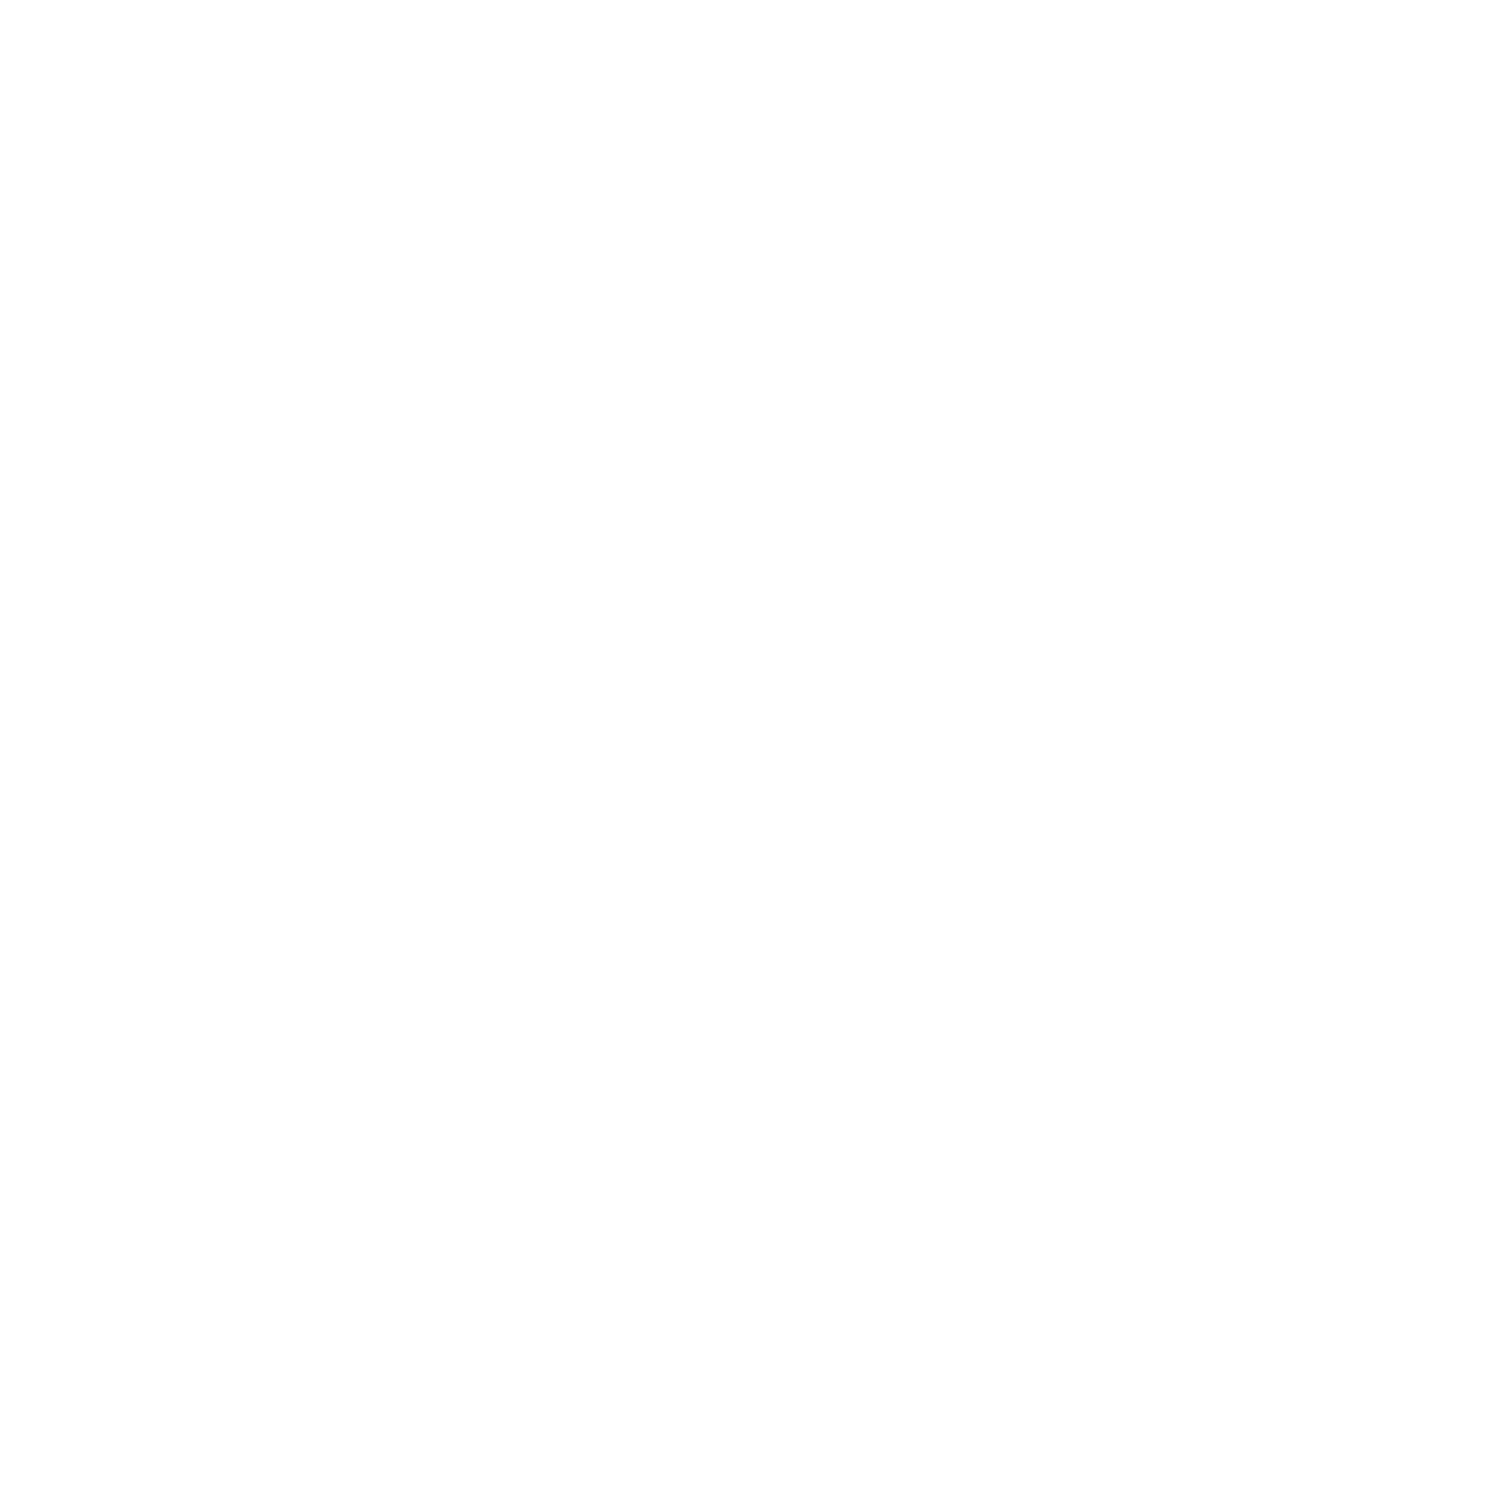 Mariah Mazanek Photography